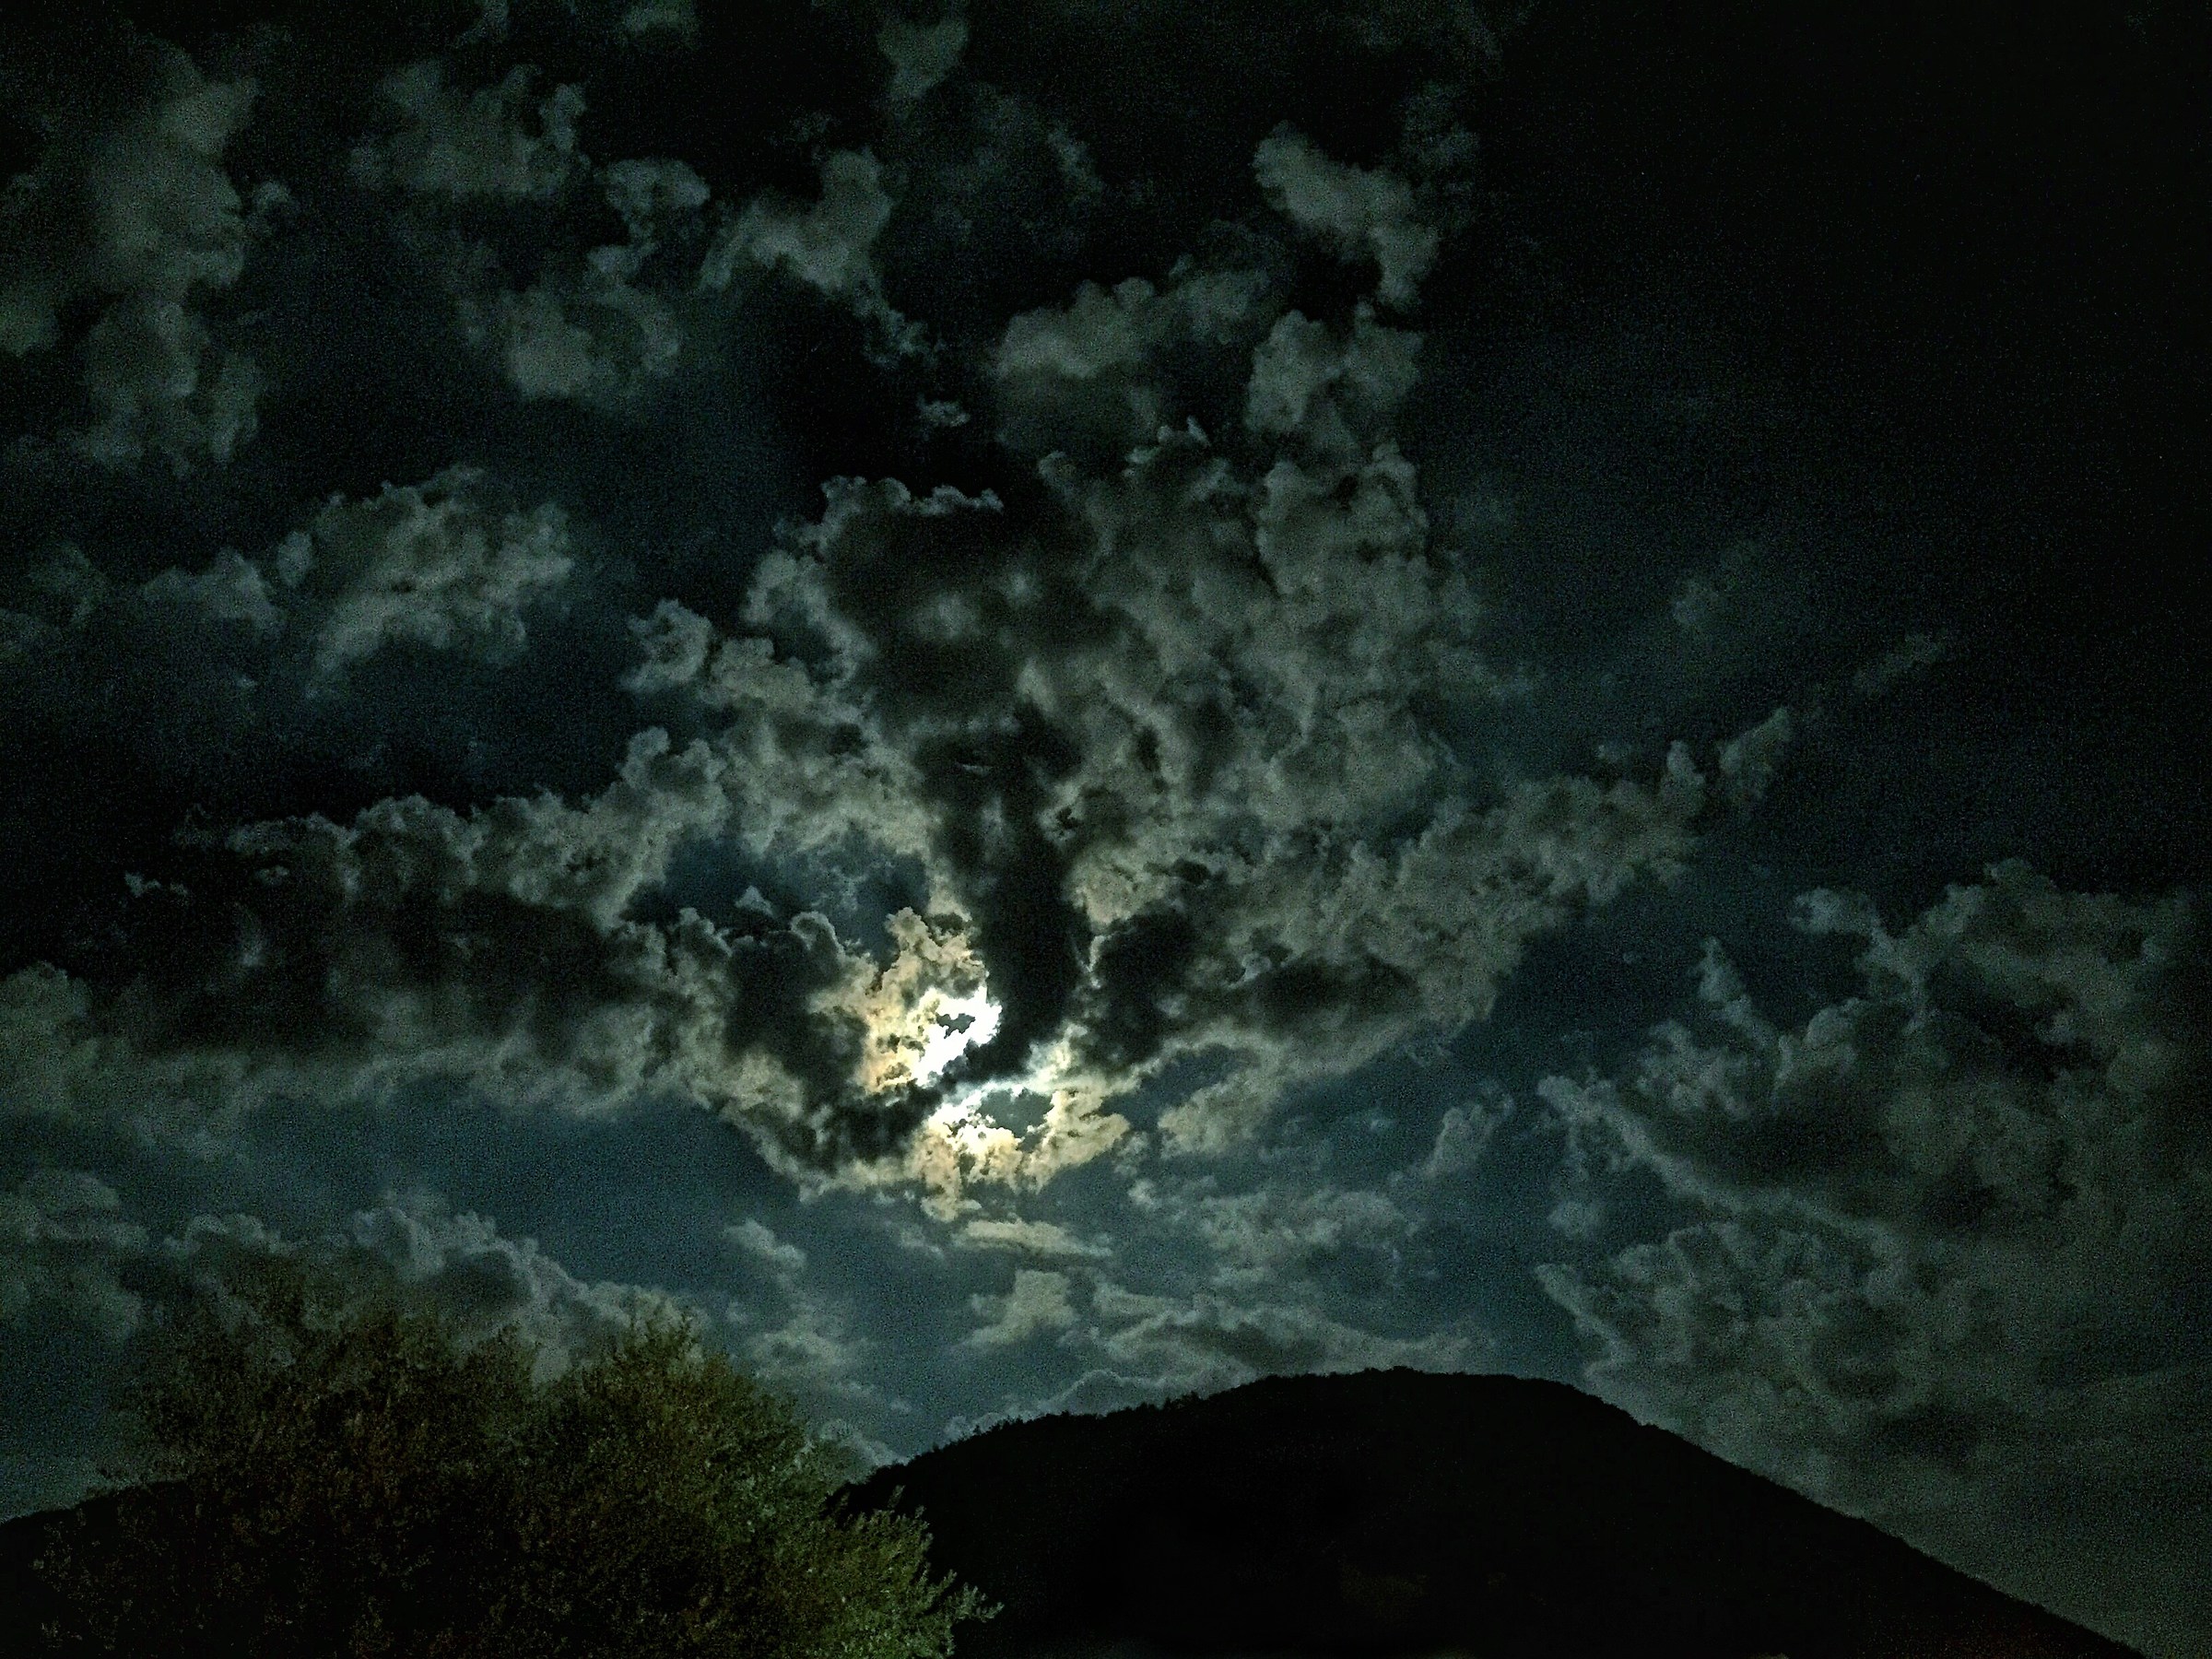 Moonlit night...